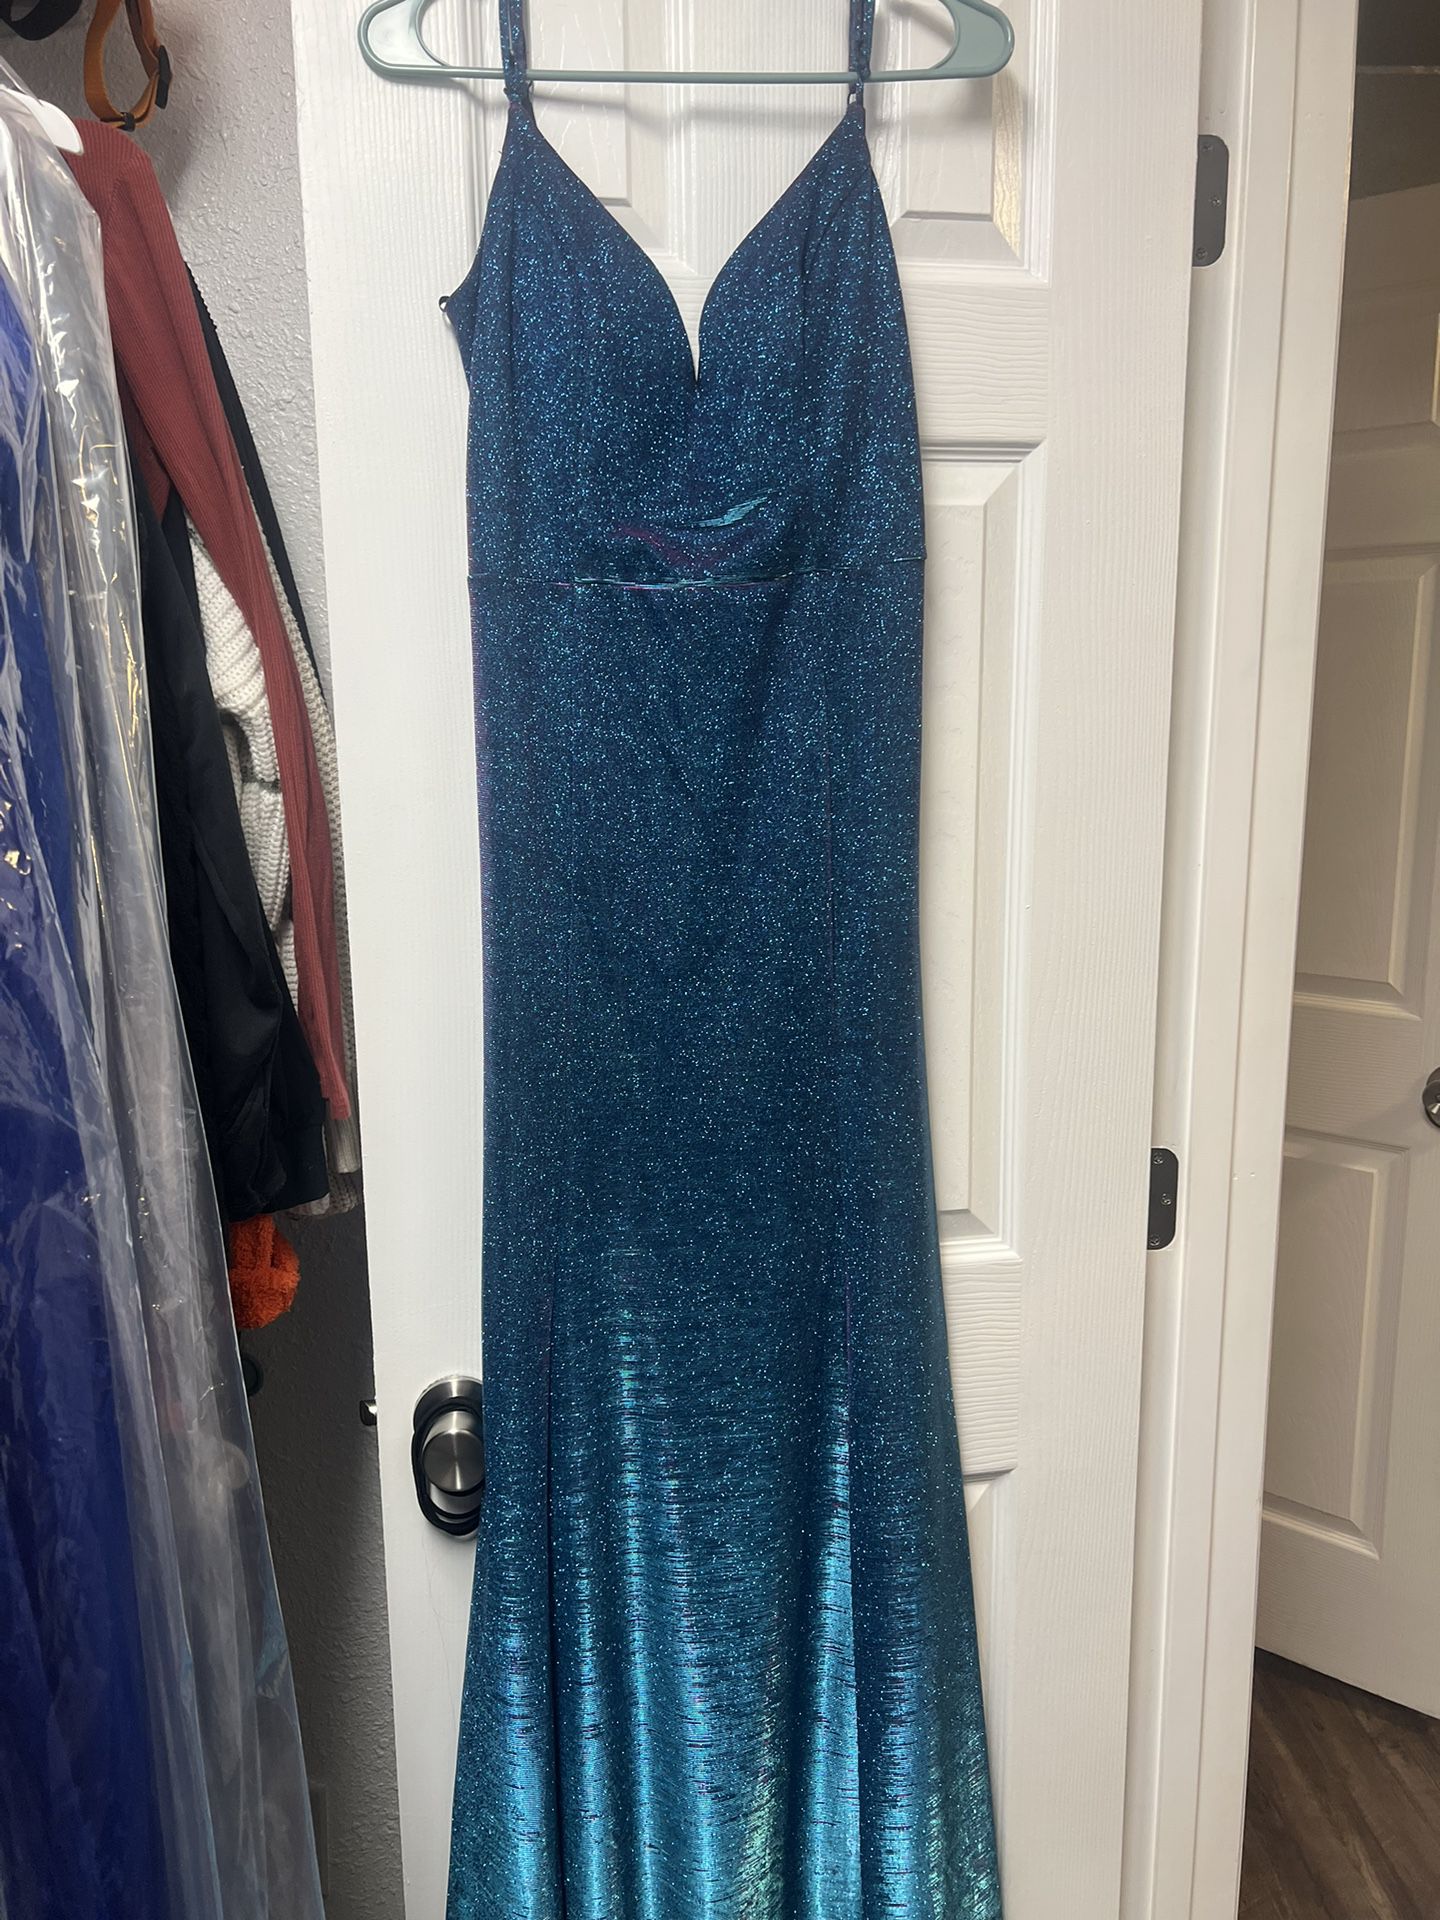 Blue long dress 